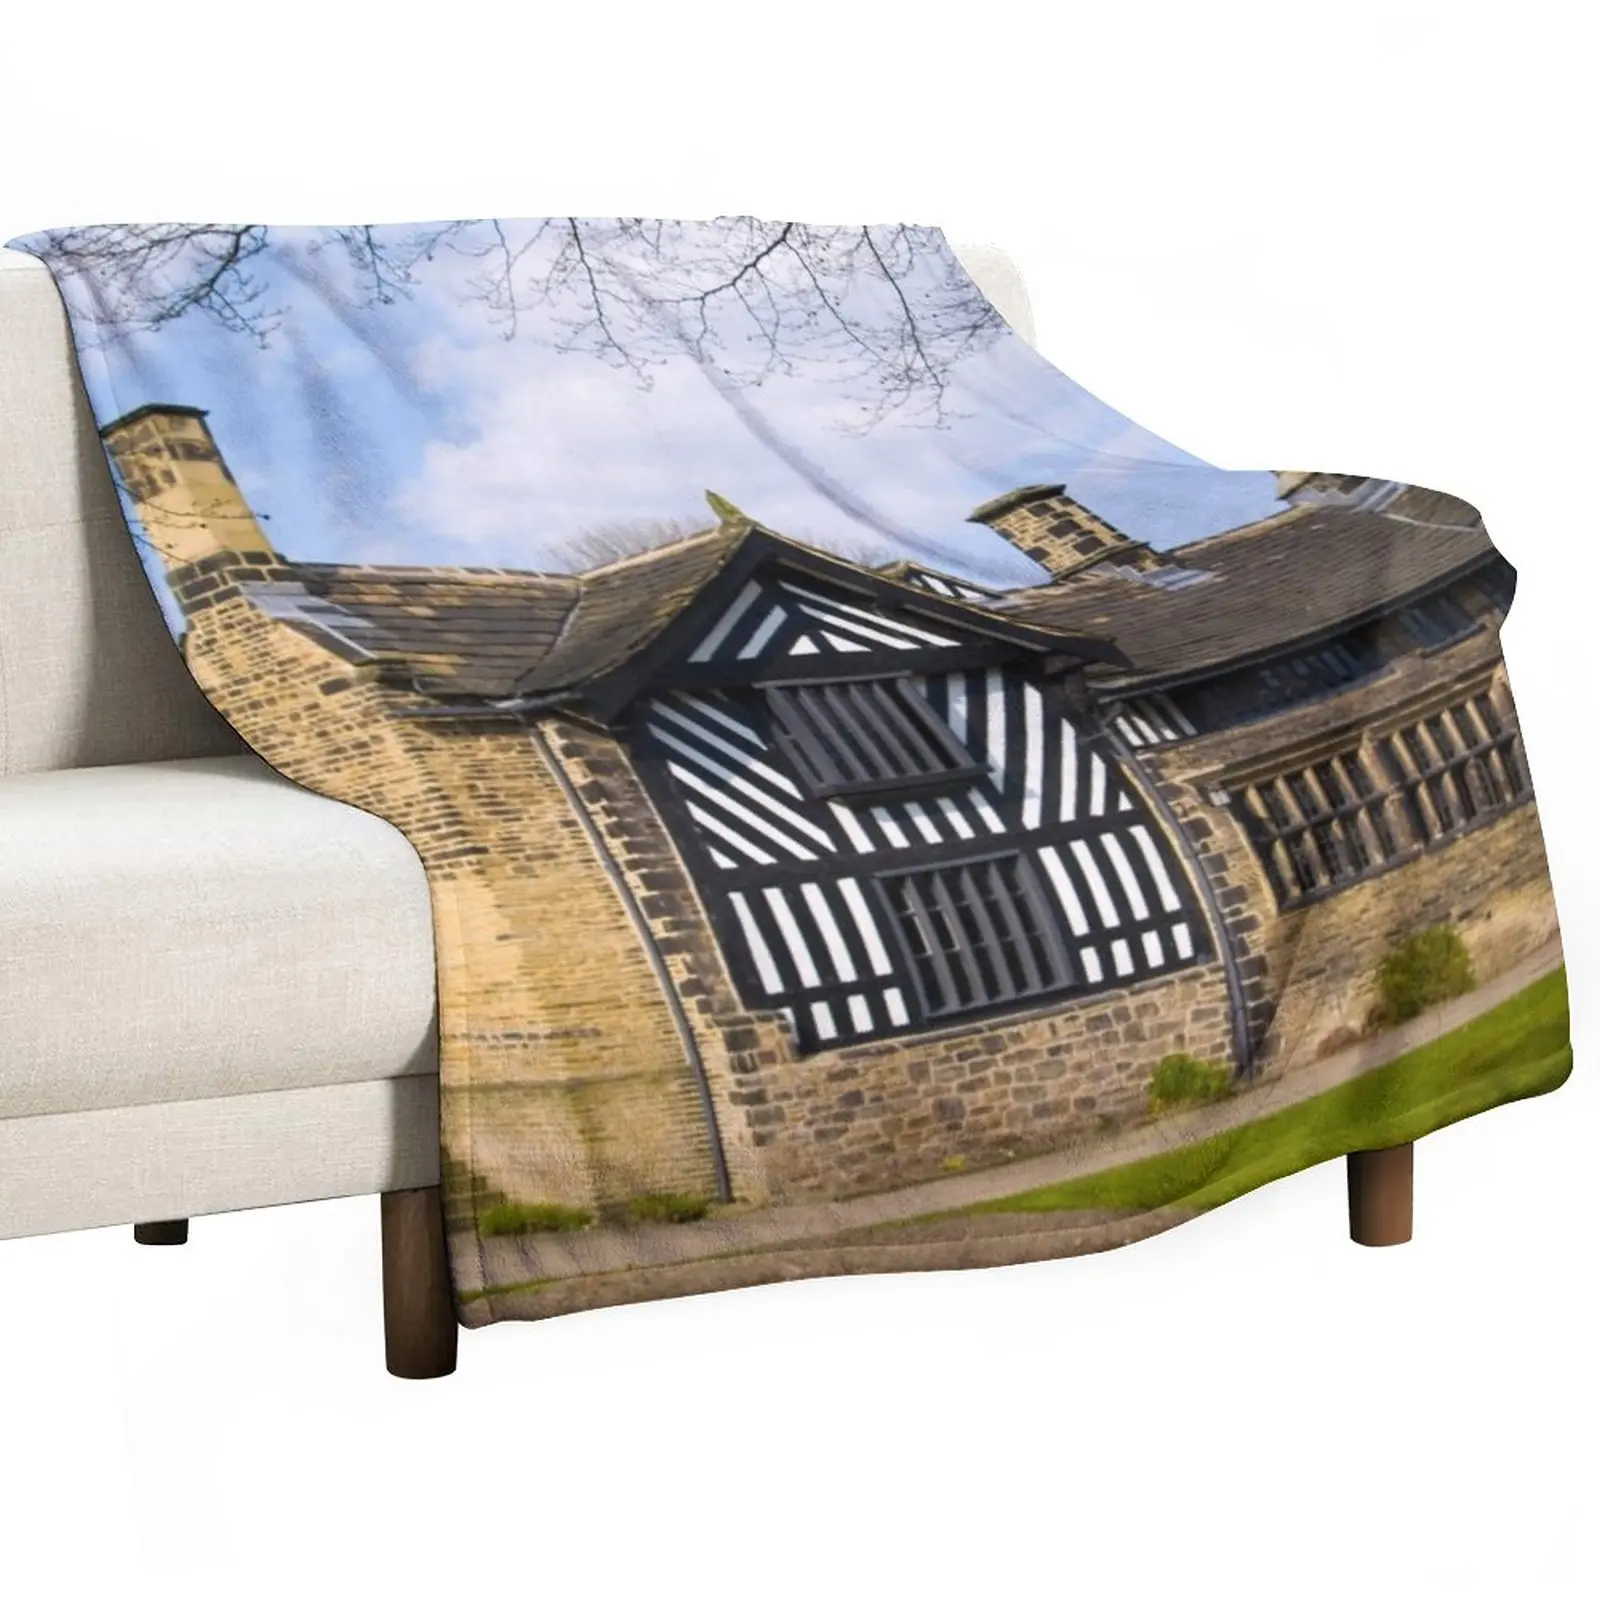 

Shibden Hall - West Yorkshire built circa 1420 Throw Blanket Cute Blanket Sleeping Bag Blanket